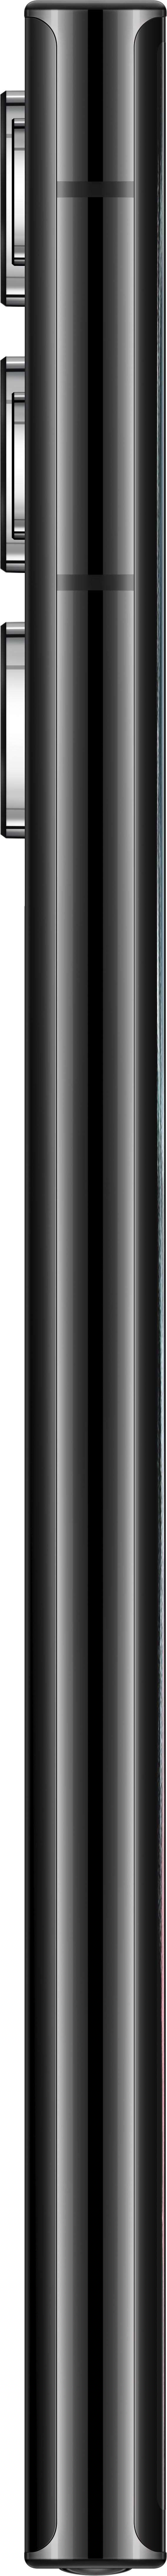 Samsung Galaxy S22 Ultra 128GB (Unlocked) Phantom Black SM-S908UZKAXAA -  Best Buy